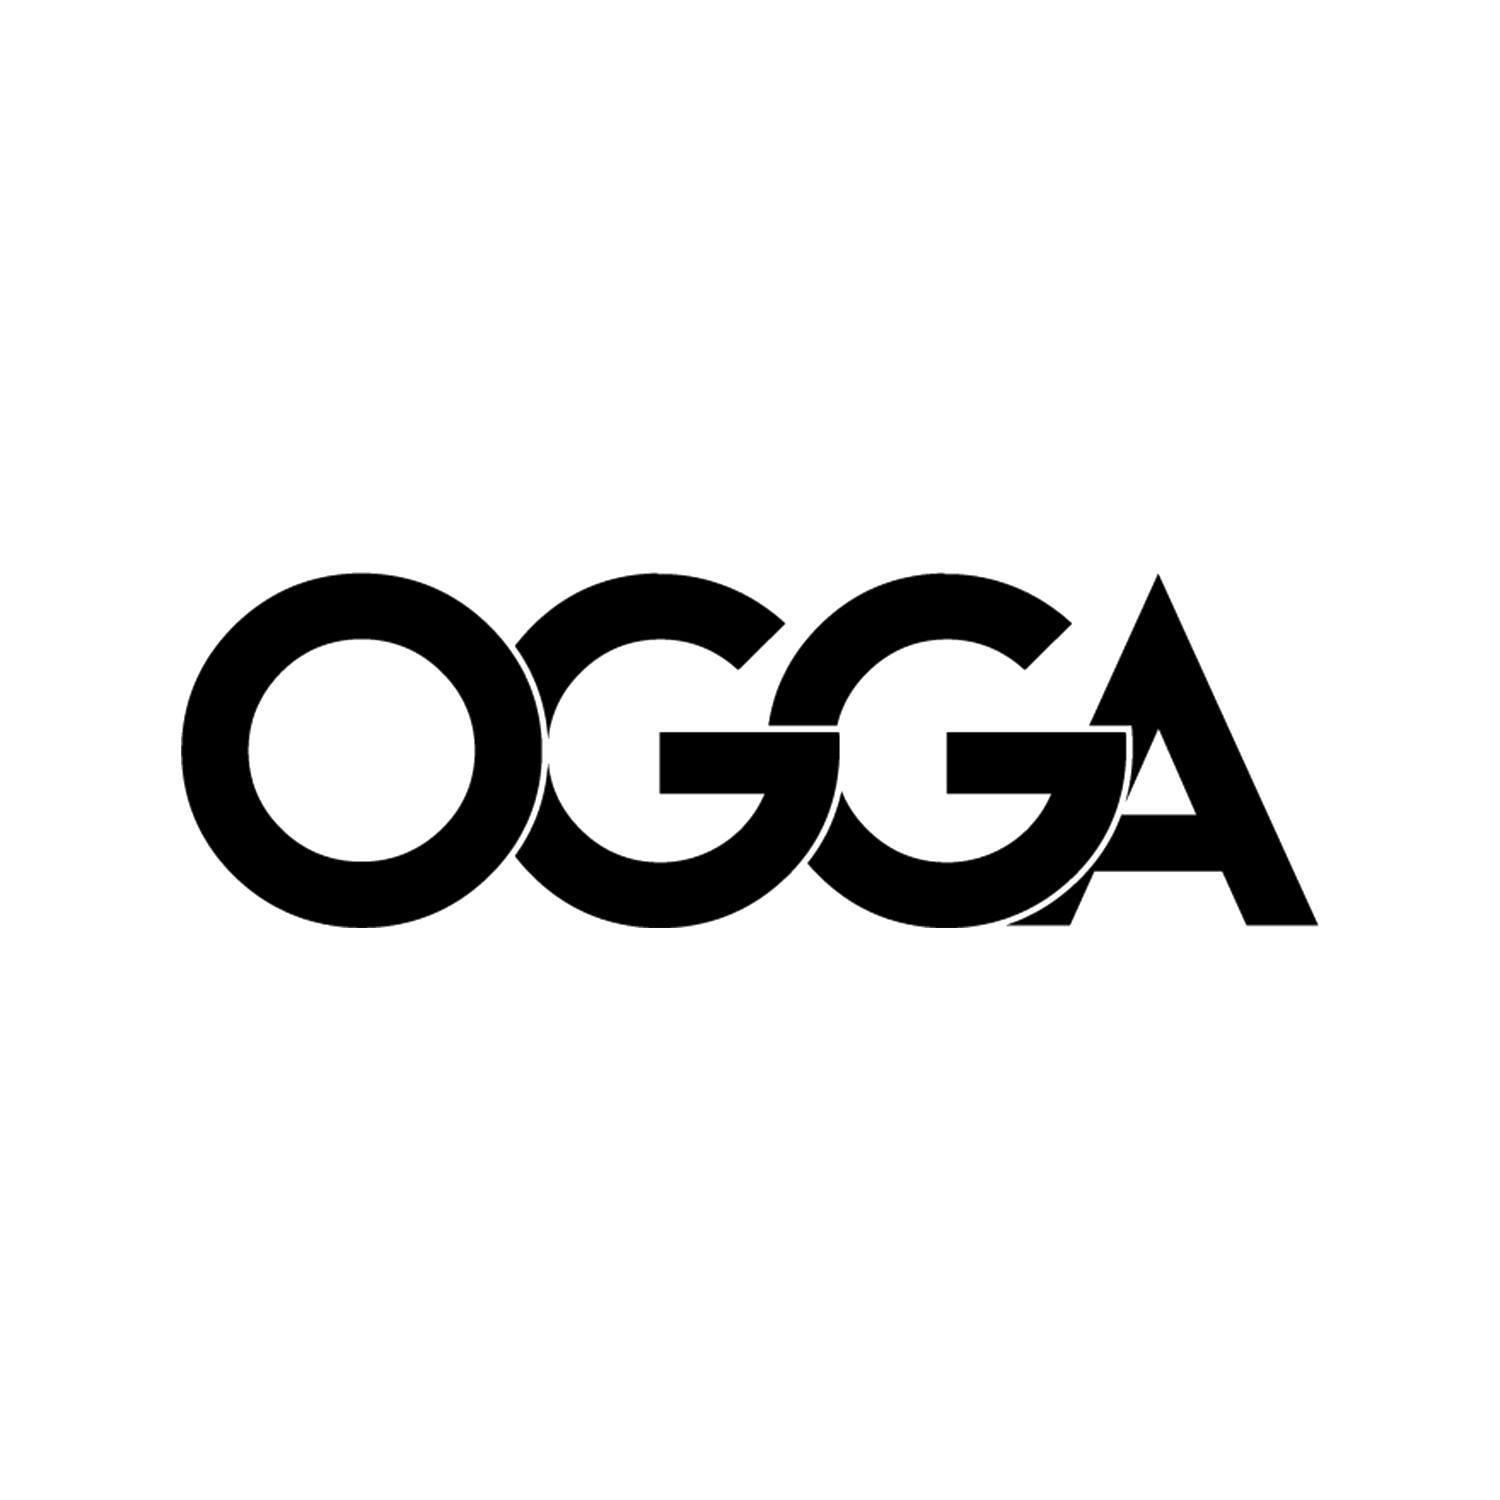 Ogga logo